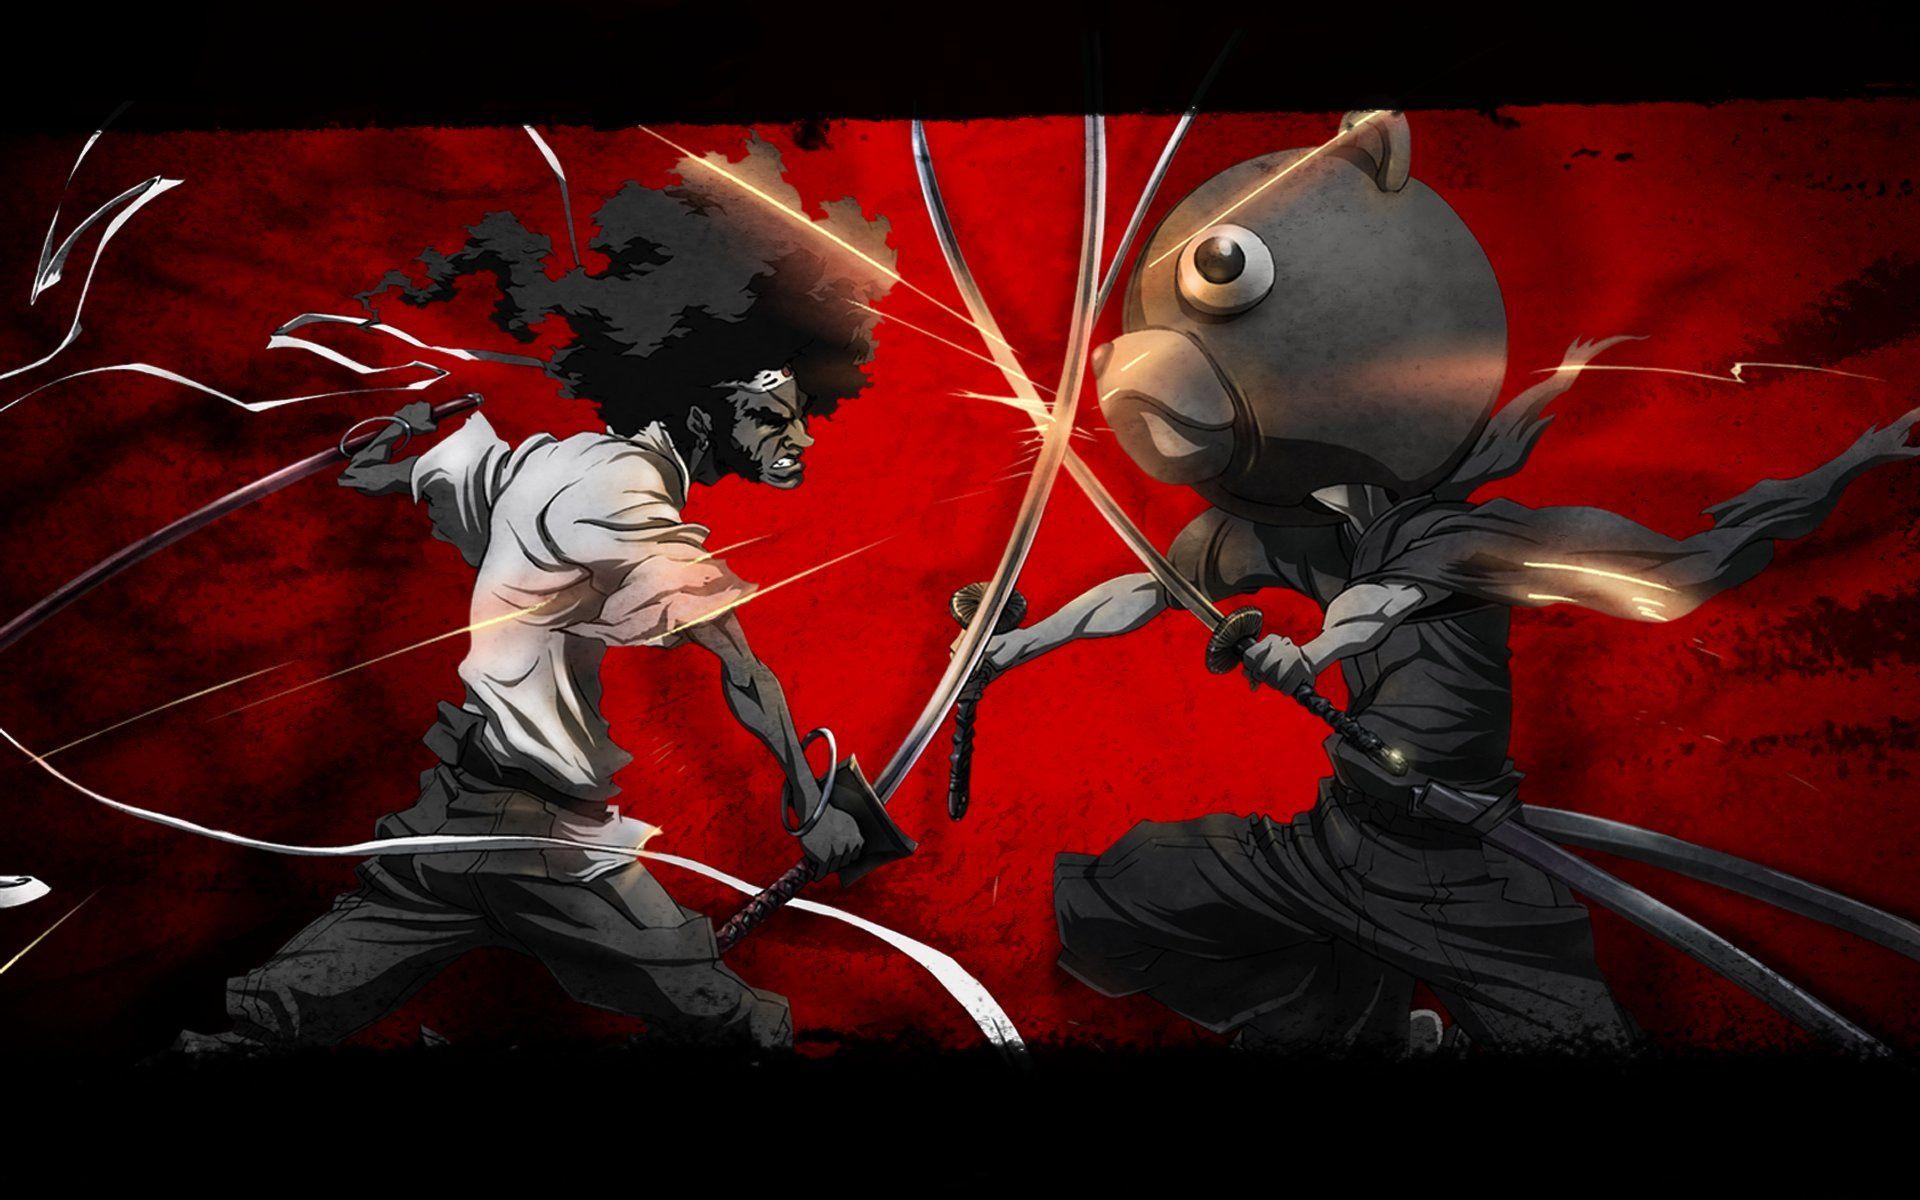 Epic Anime Fighting Wallpaper High Quality Resolution. Afro samurai, Horror movie art, Samurai anime